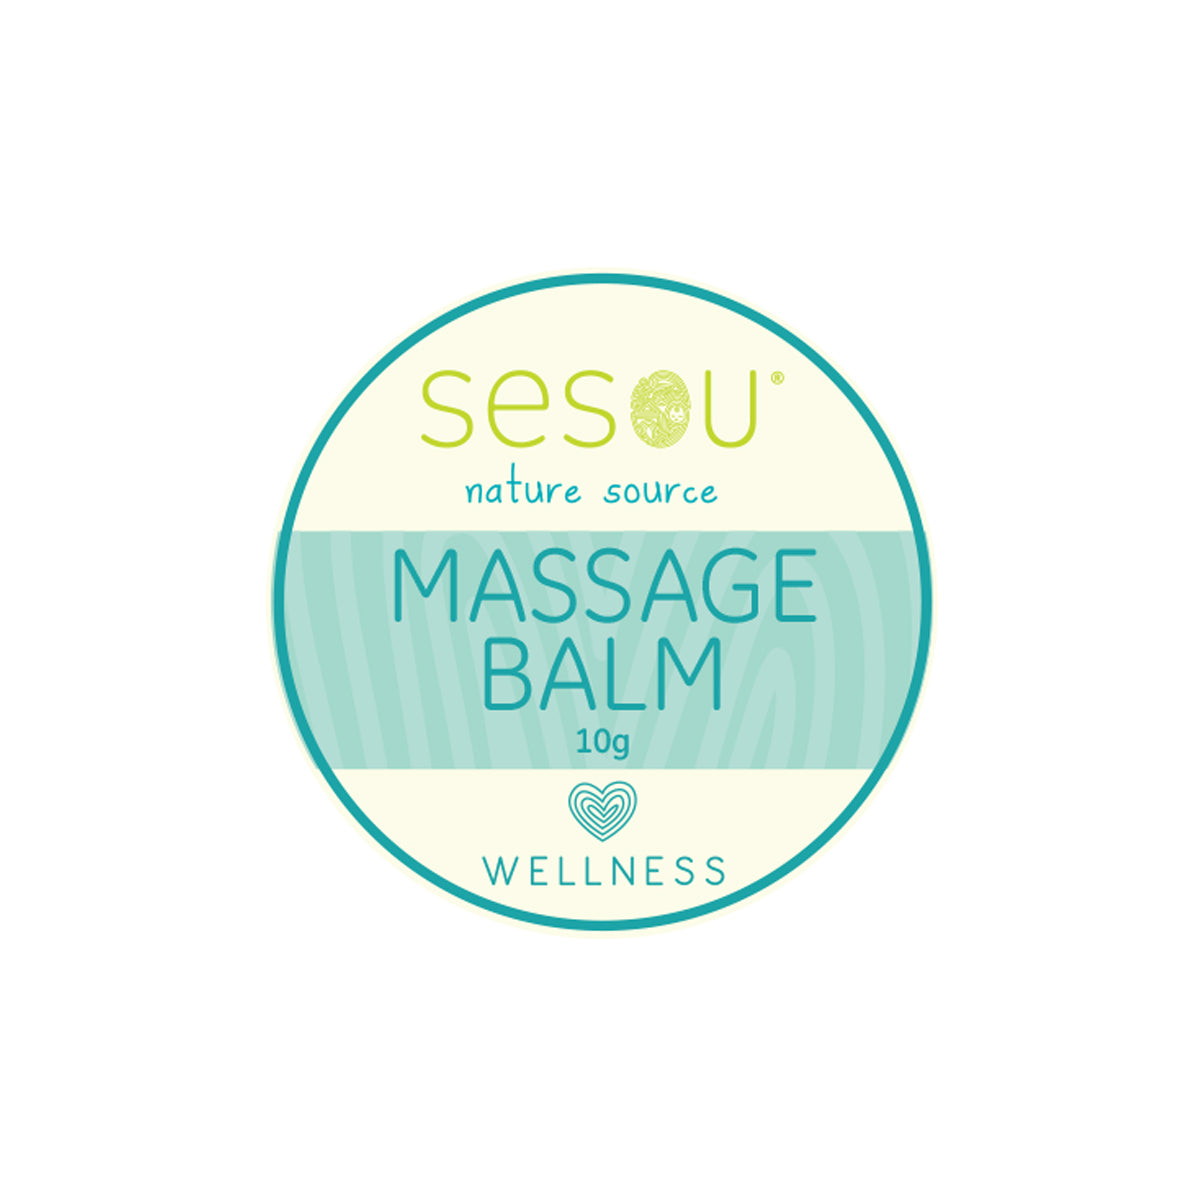 Massage Balm 10g